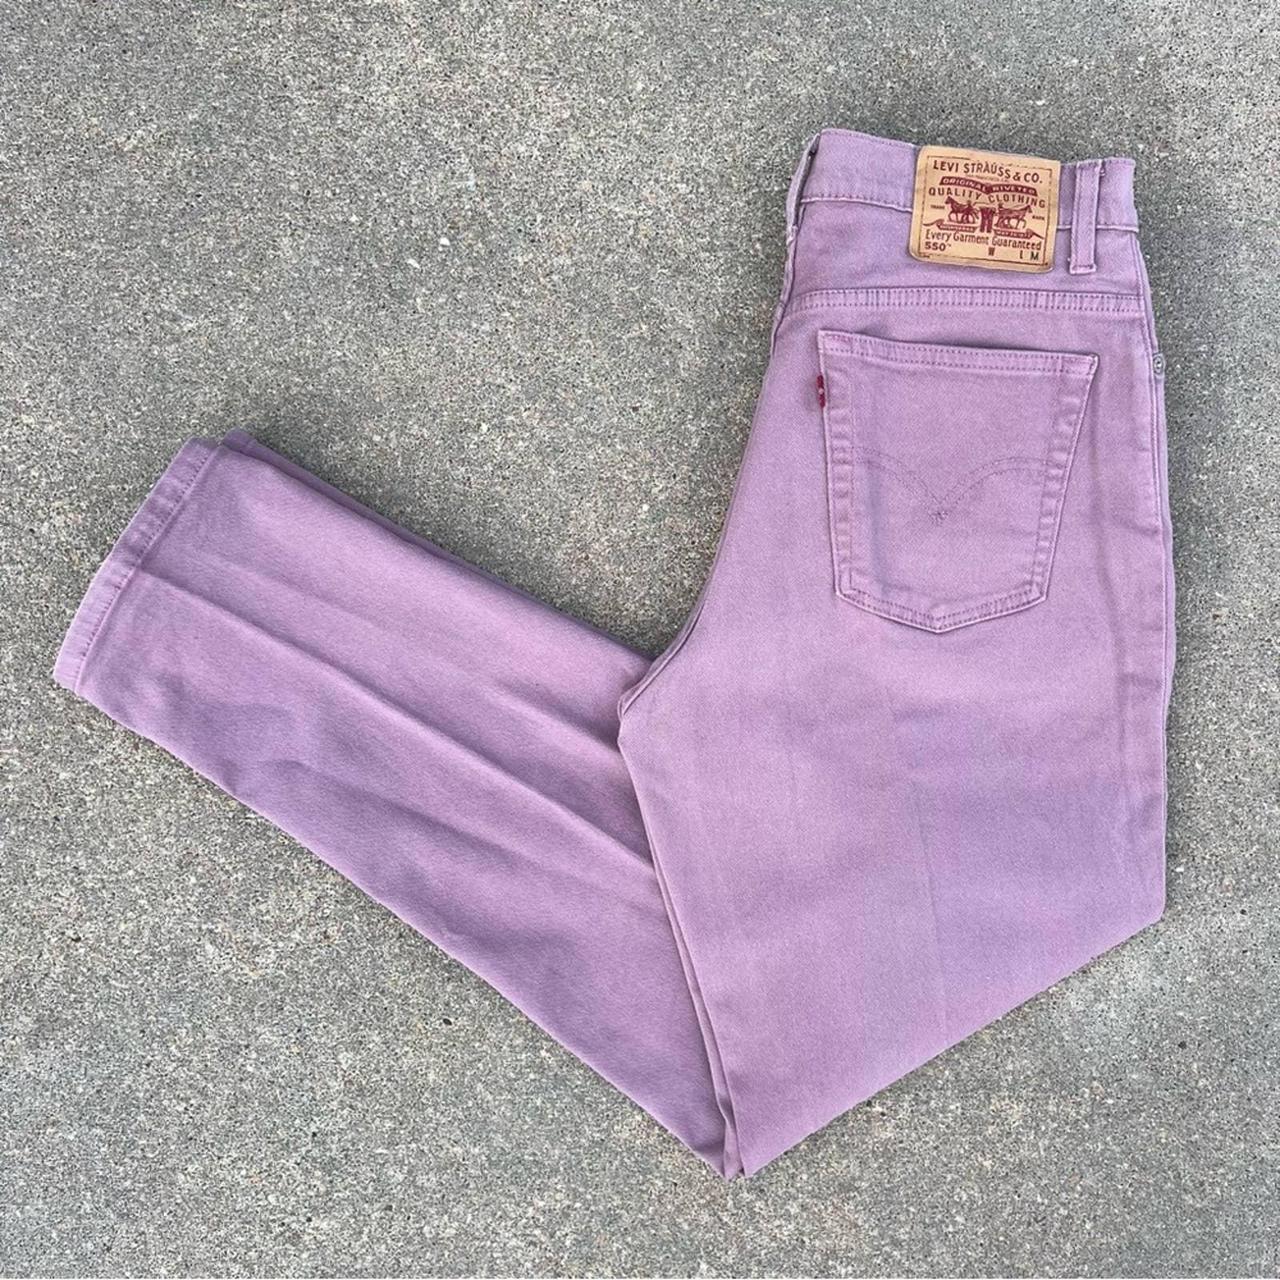 Levi's Women's Pink Jeans | Depop